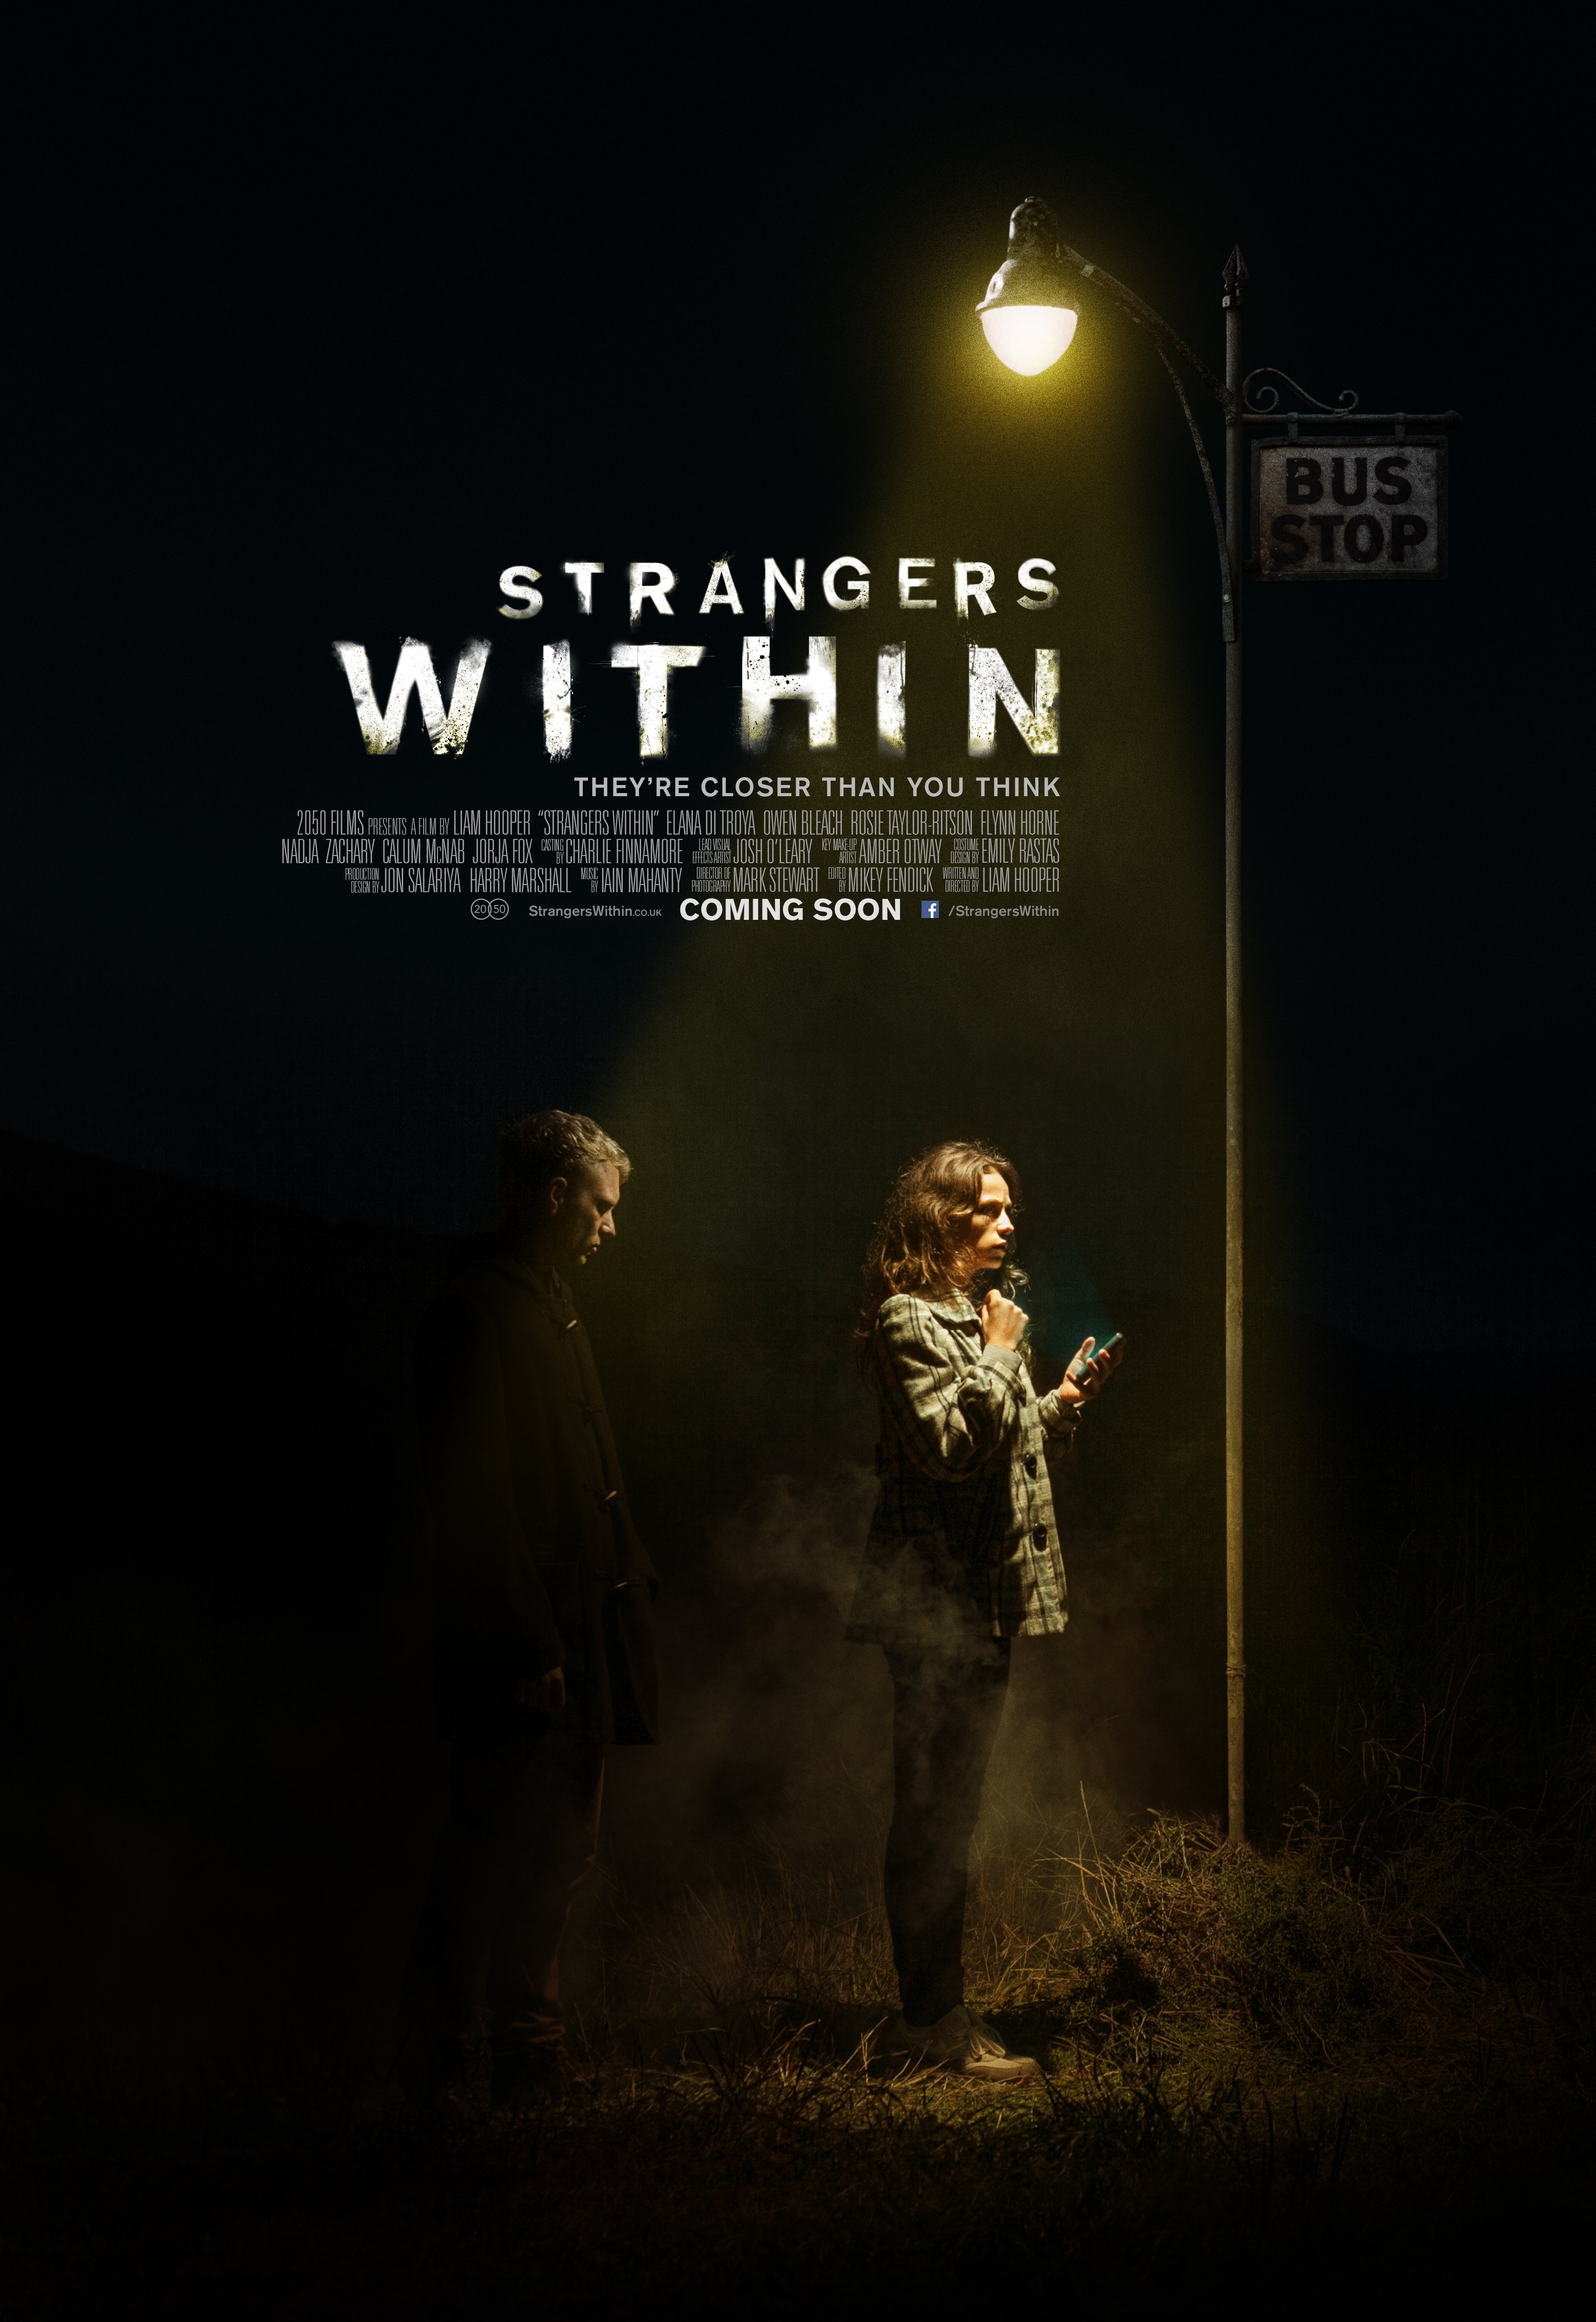 Nonton film Strangers Within layarkaca21 indoxx1 ganool online streaming terbaru